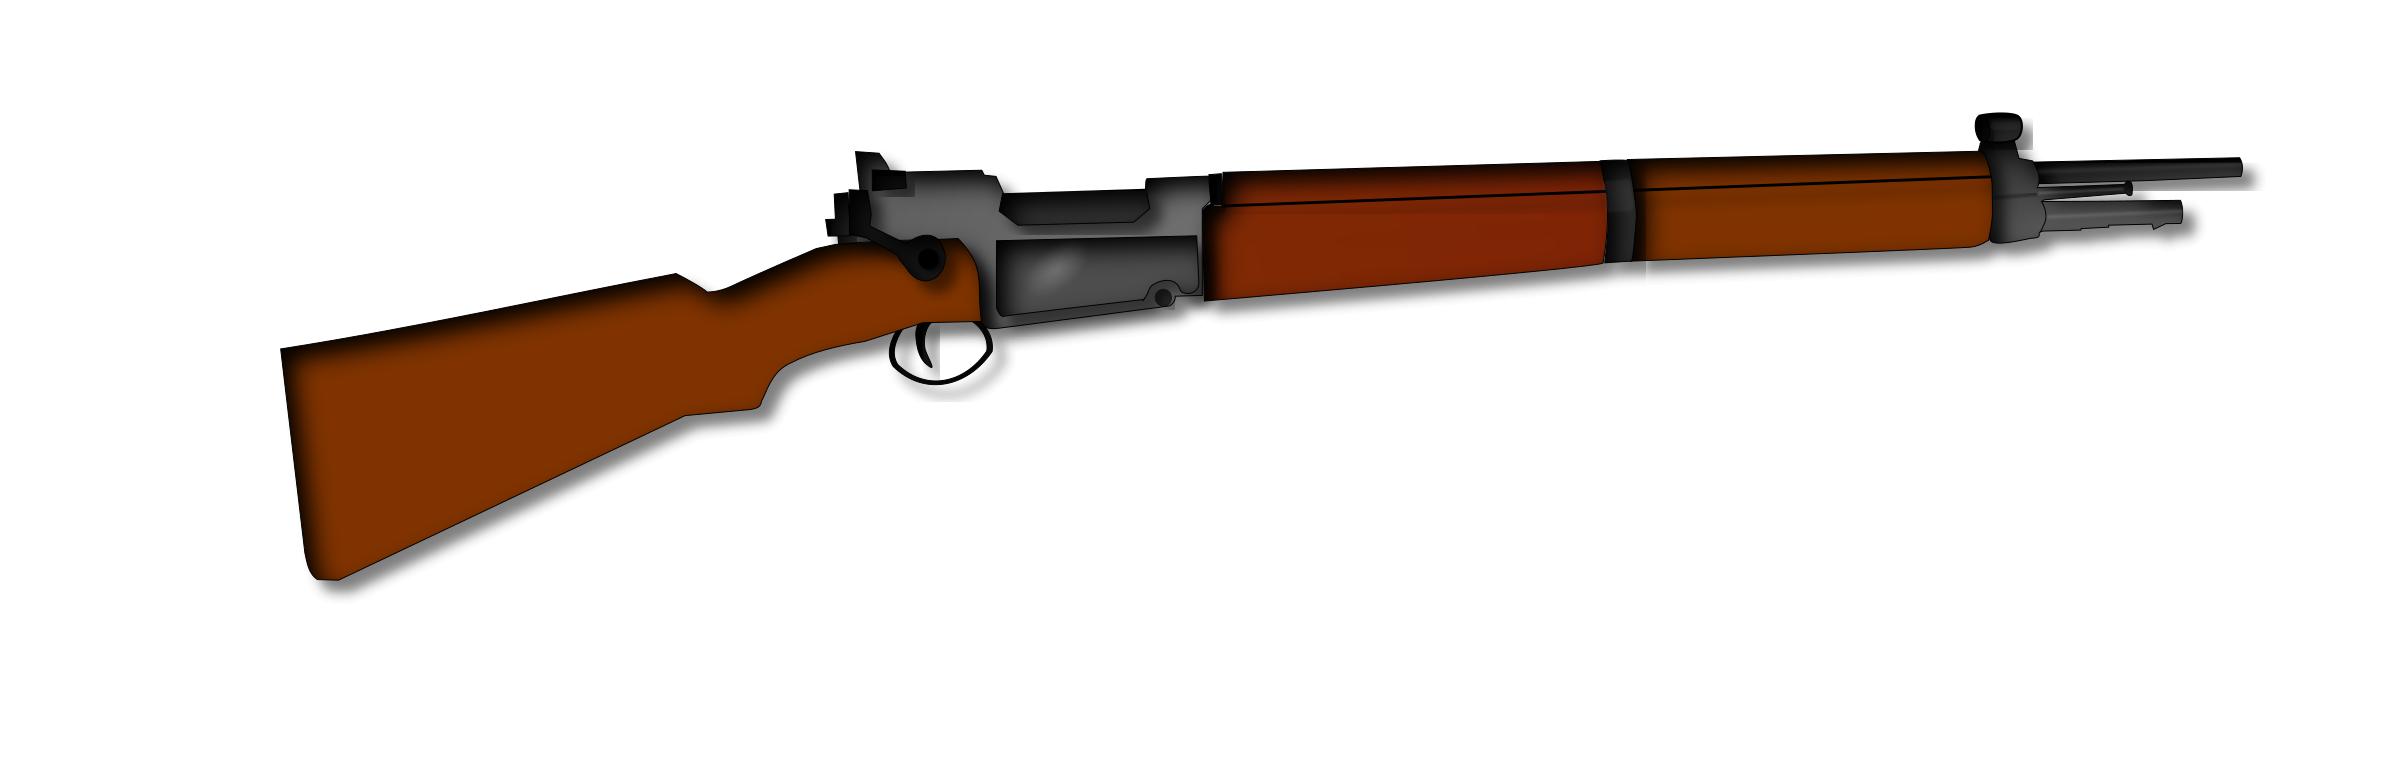 MAS36 rifle png